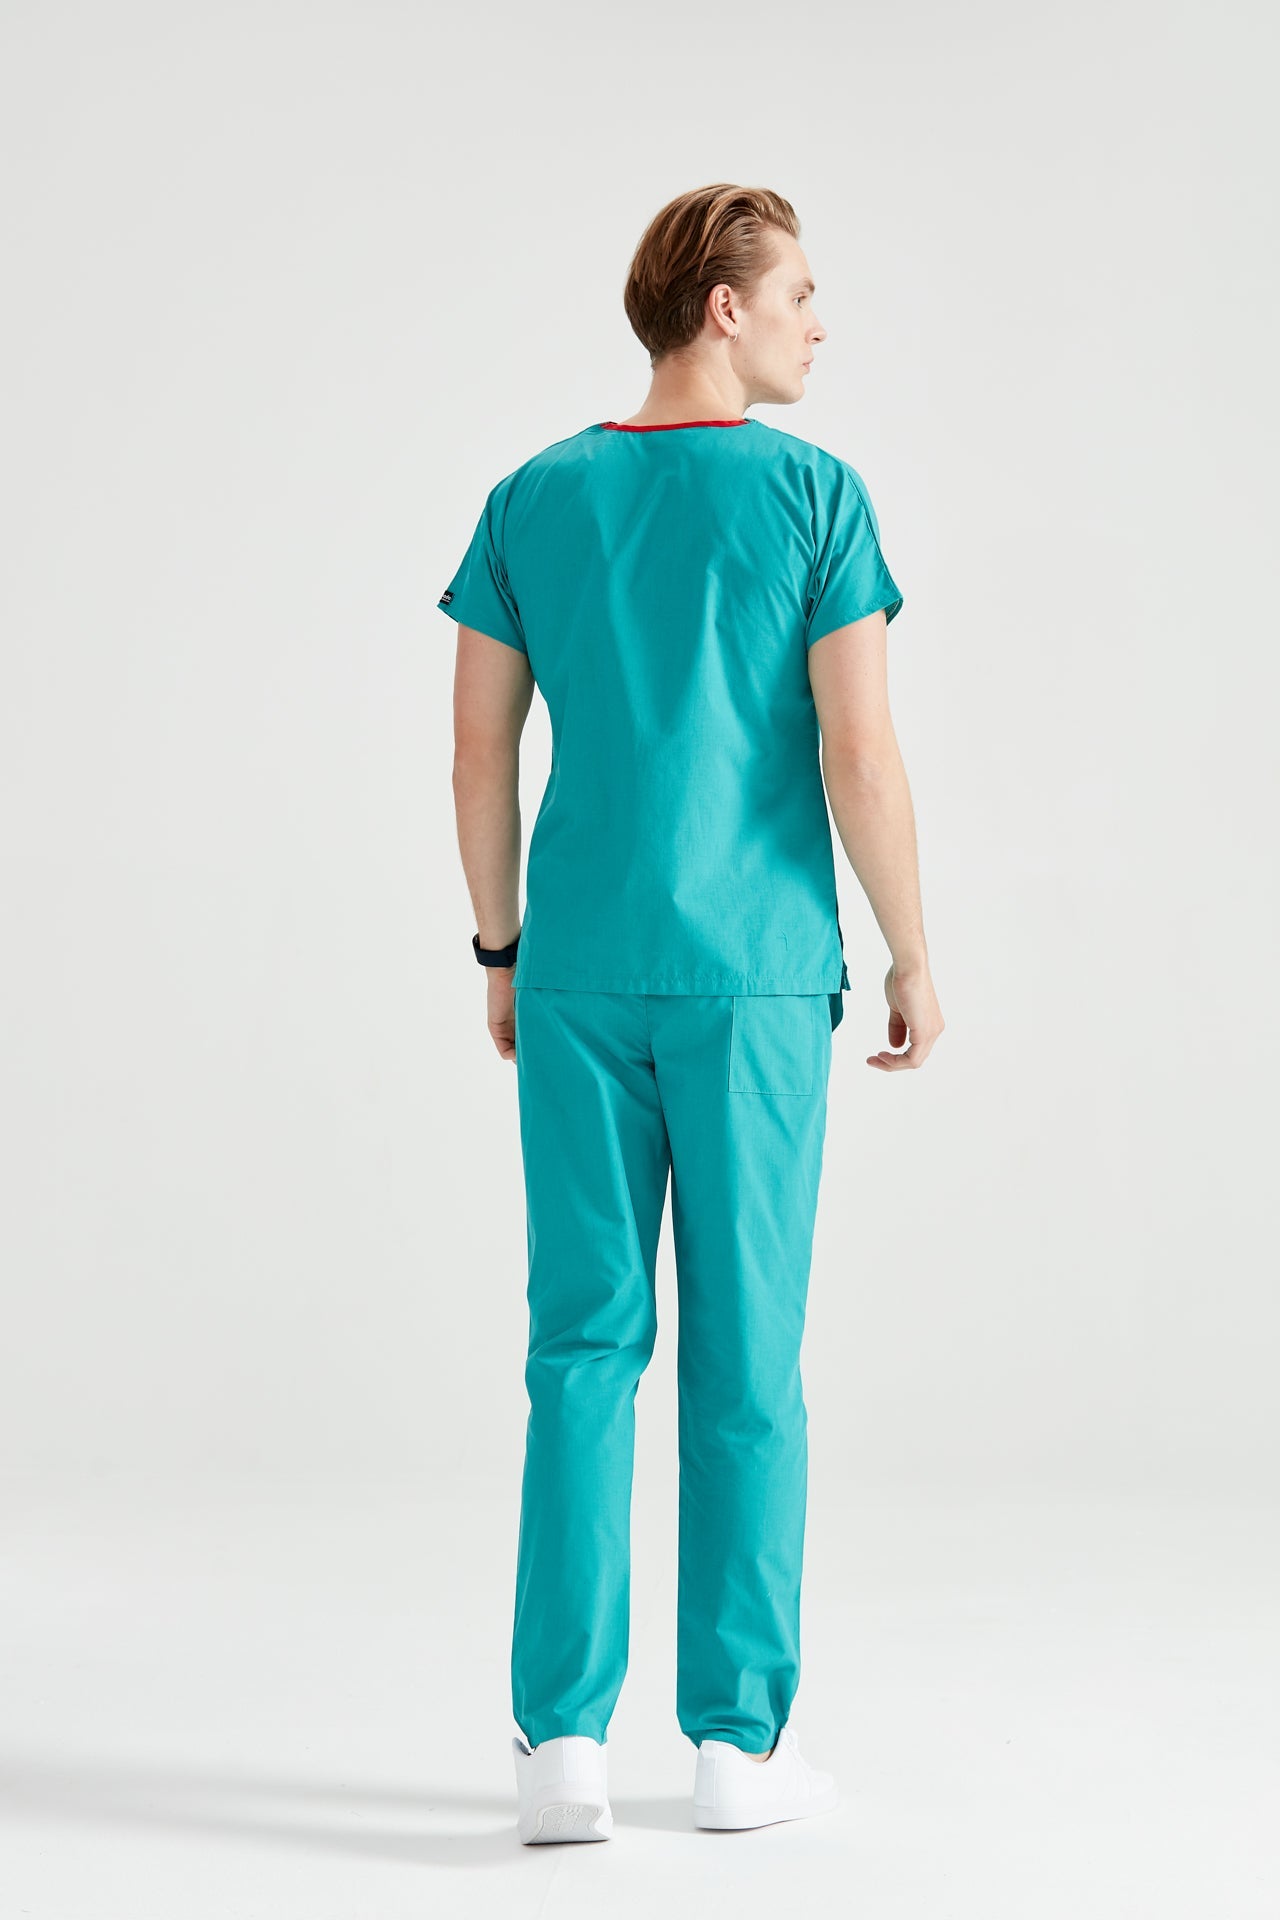 Costum Medical Verde Chirurgical, Barbati - Surgical - Model Classic